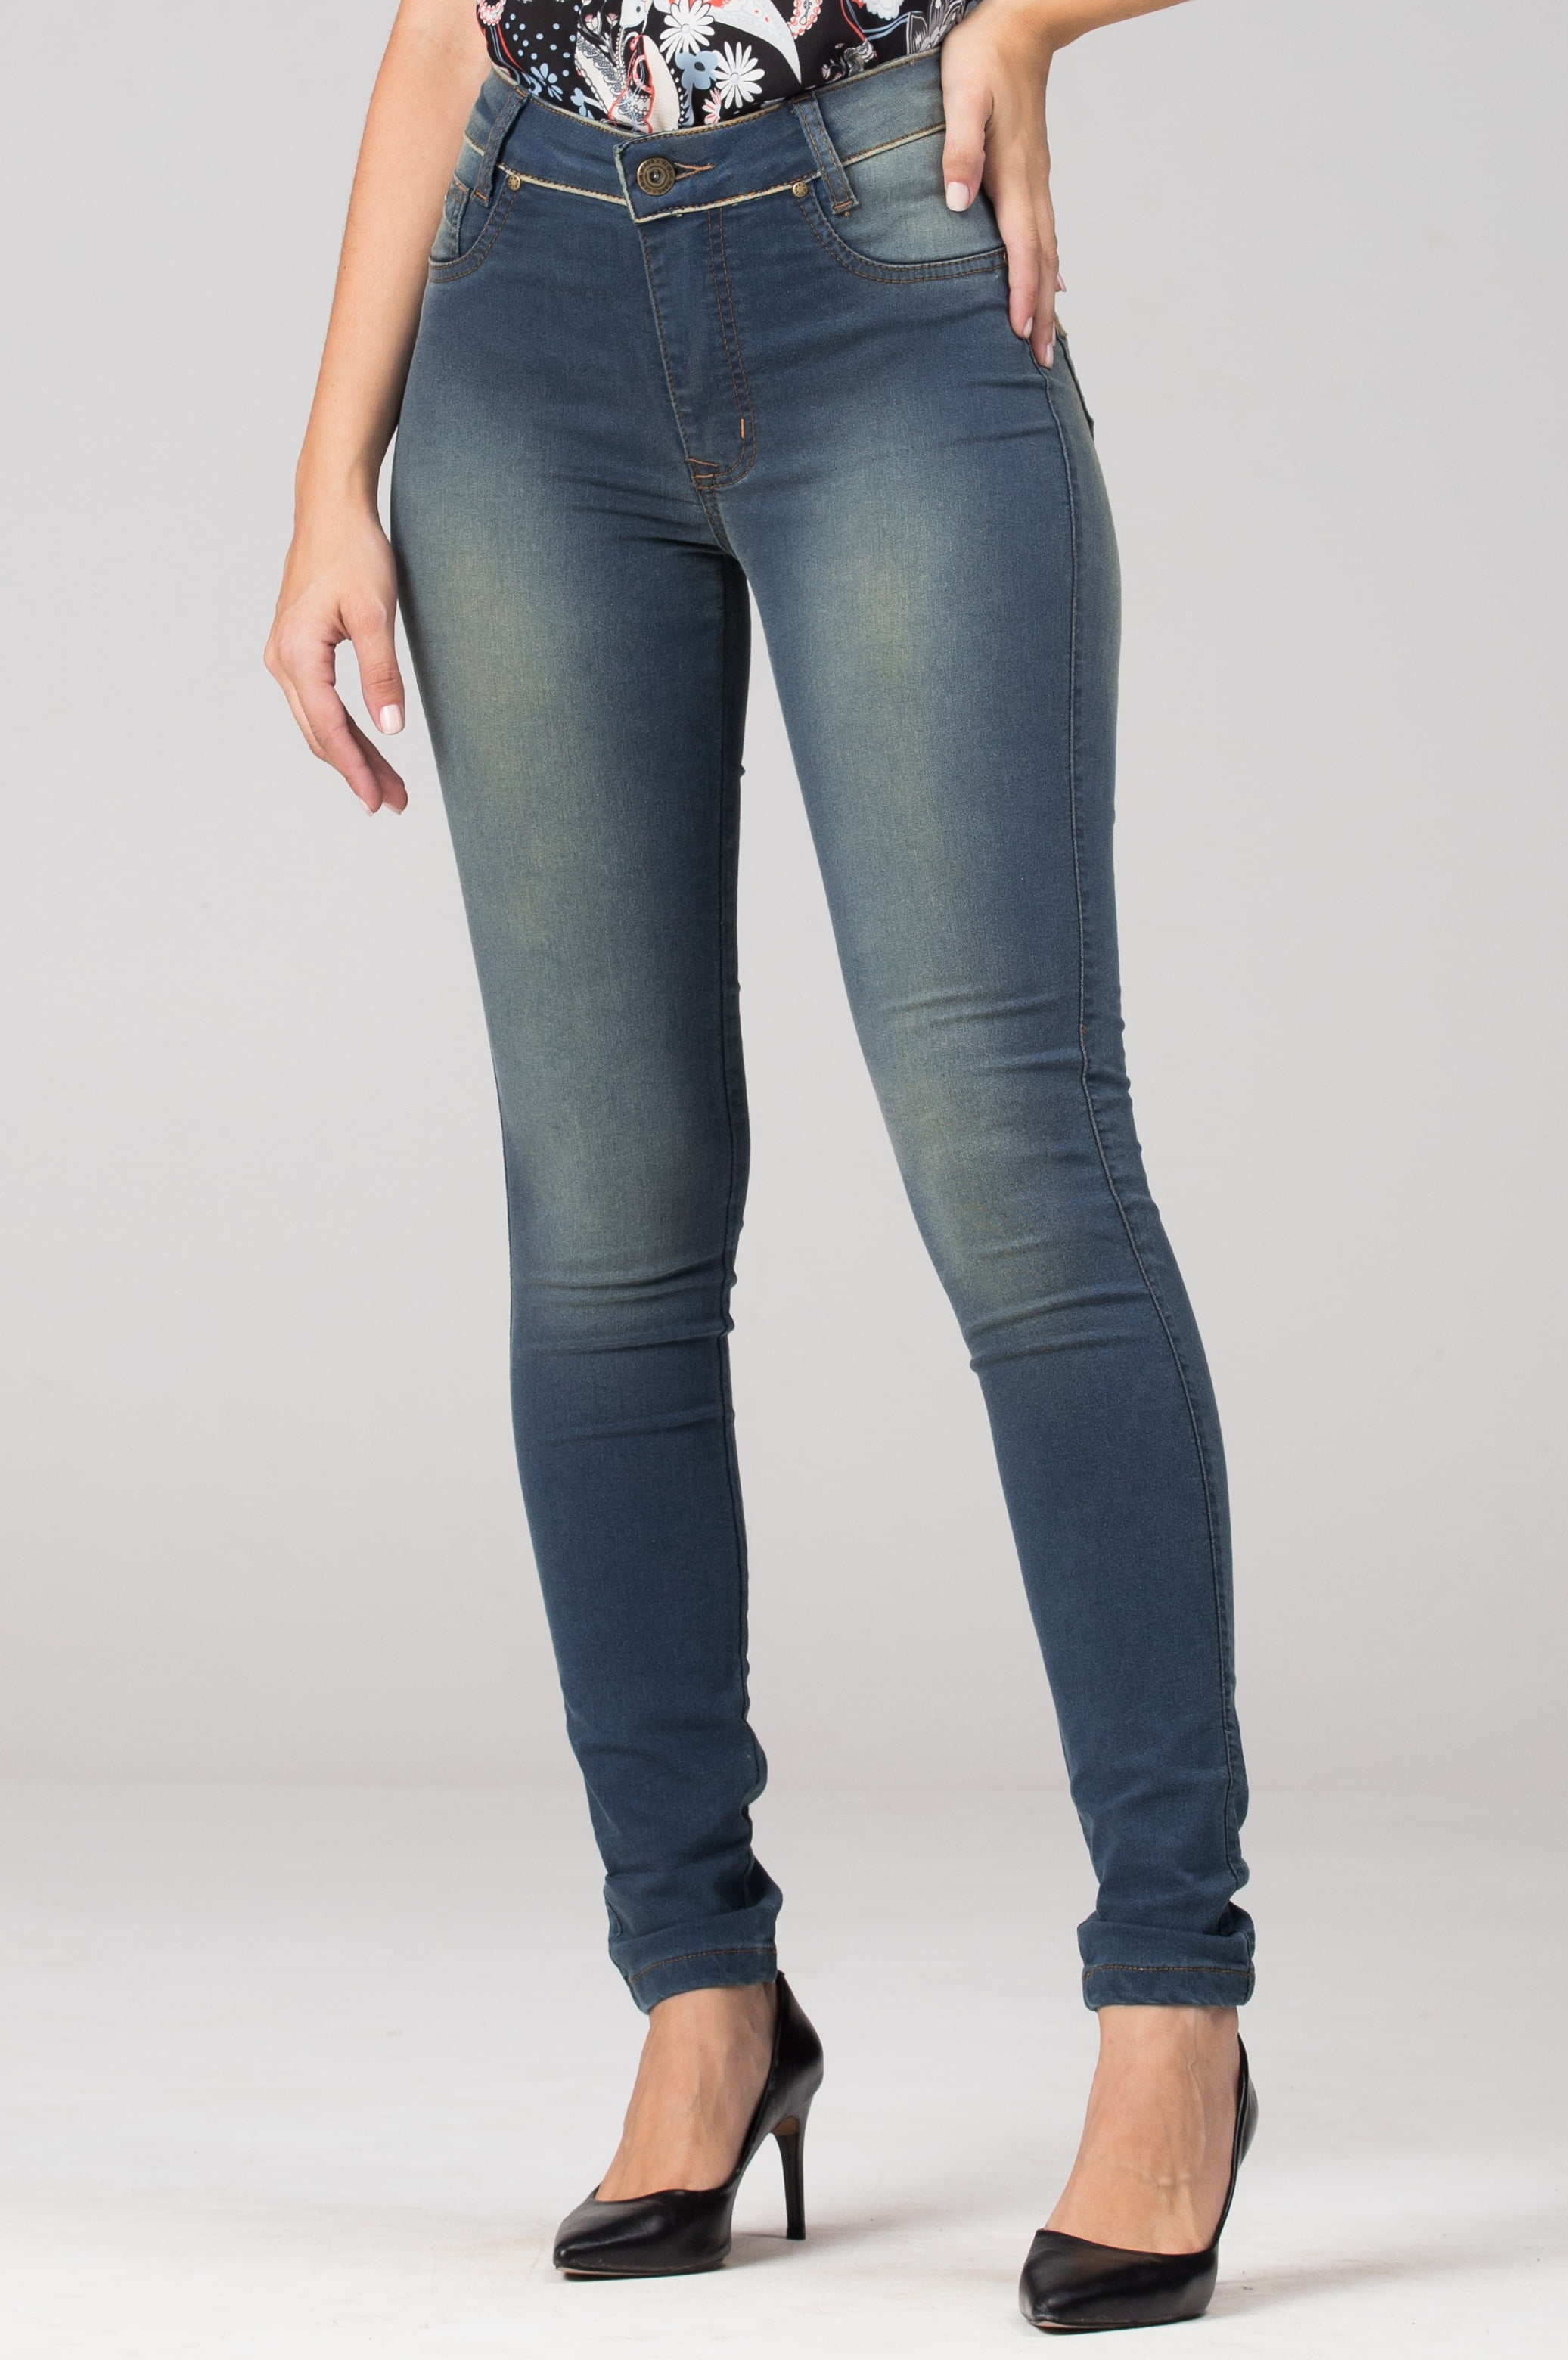 Produtos - Calça Jeans Skinny Sport Fino La Rossi - AC Jeans - (11)  5521-3504